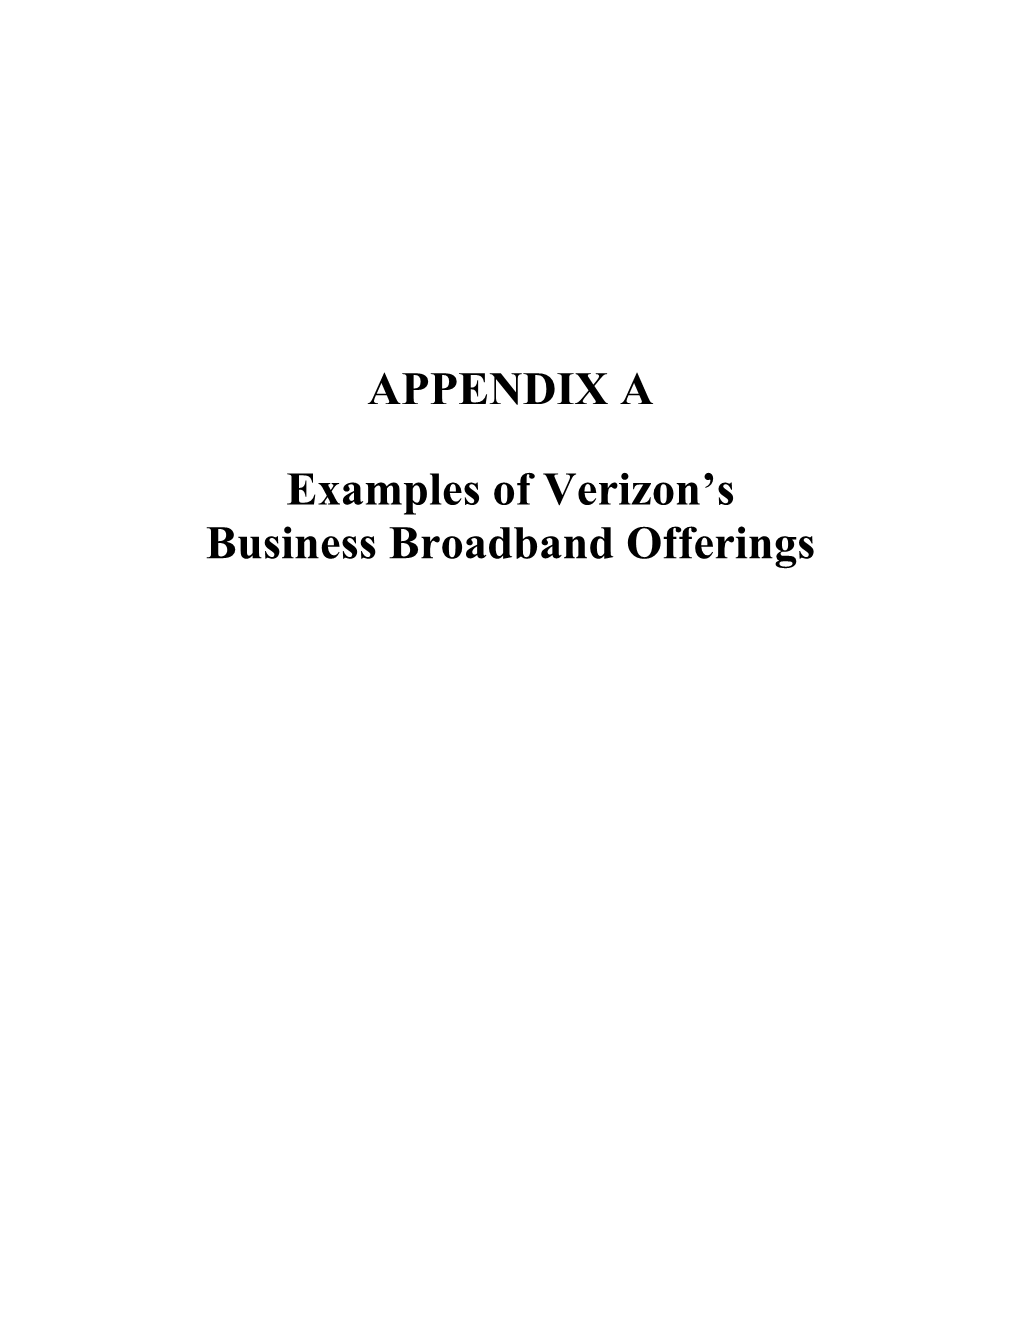 APPENDIX a Examples of Verizon's Business Broadband Offerings